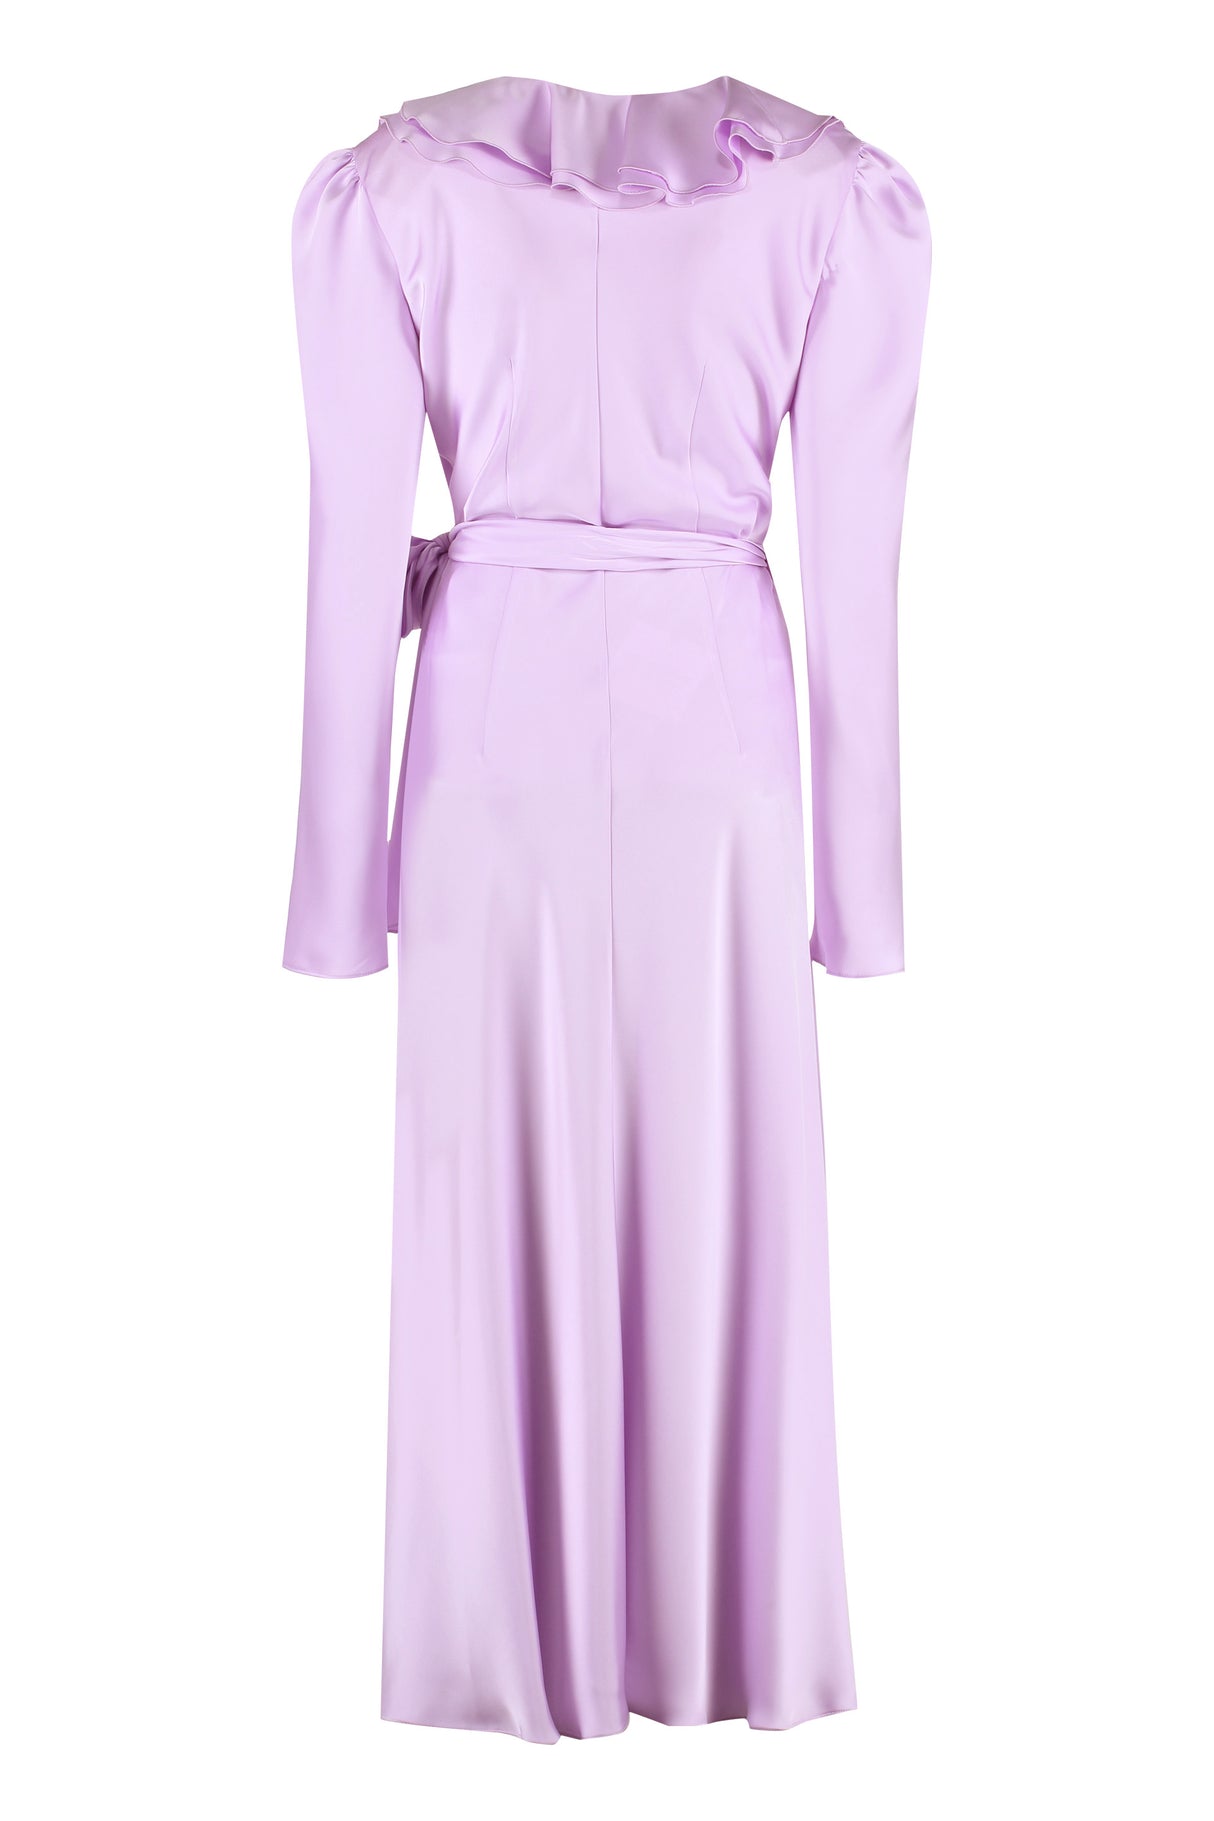 PHILOSOPHY DI LORENZO SERAFINI Frill Wrap Dress in Purple - FW23 Collection